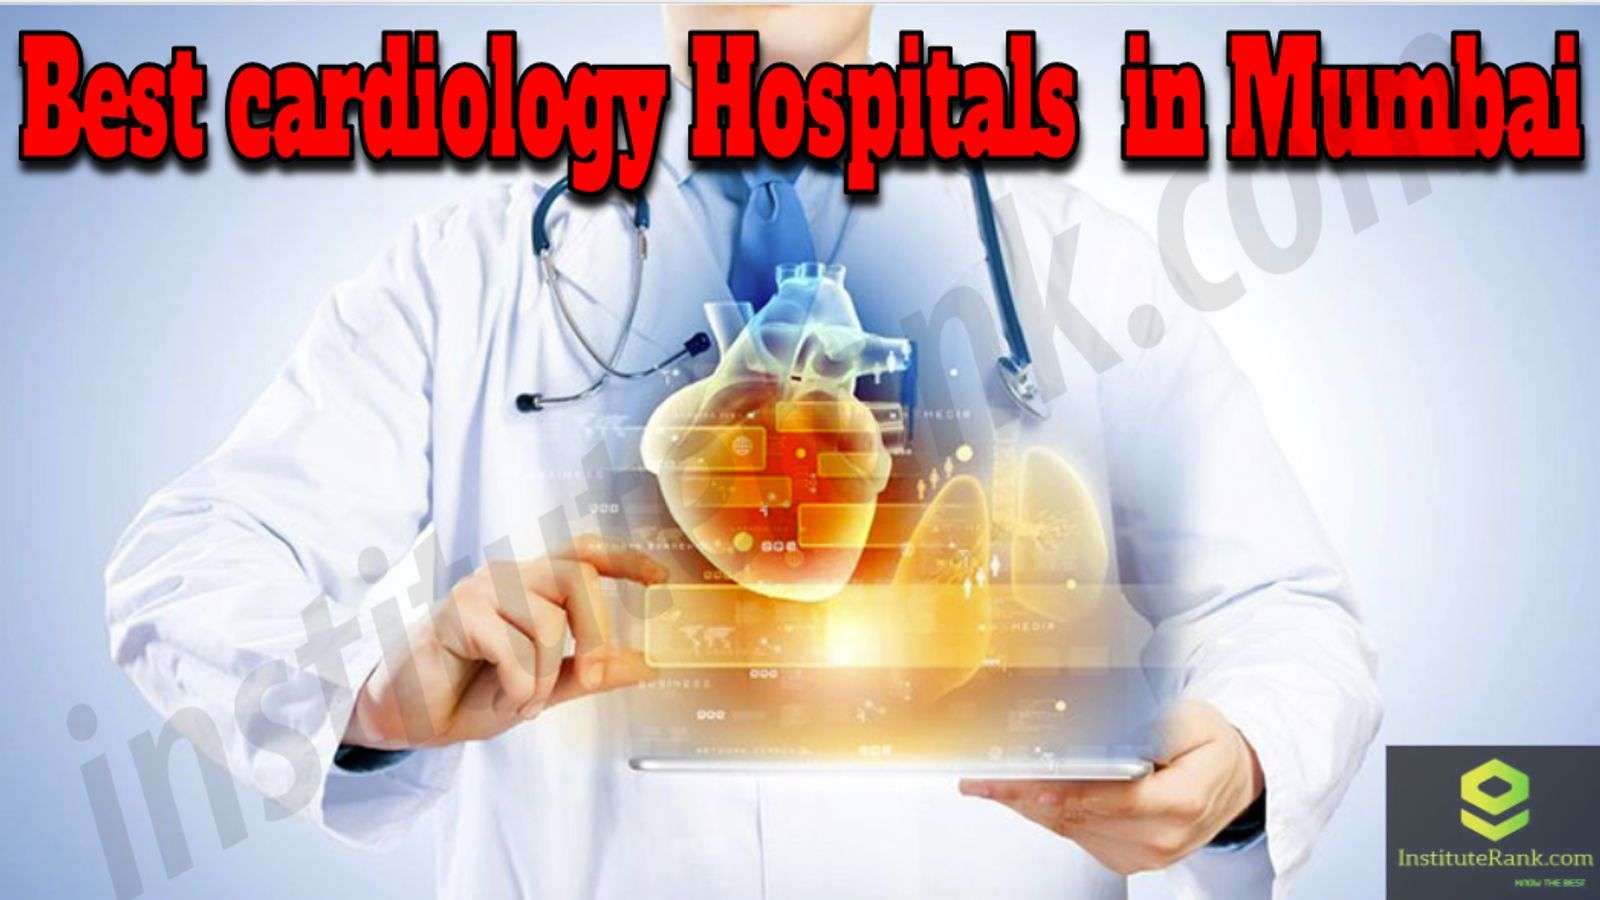 Best Cardiology Hospitals In Mumbai